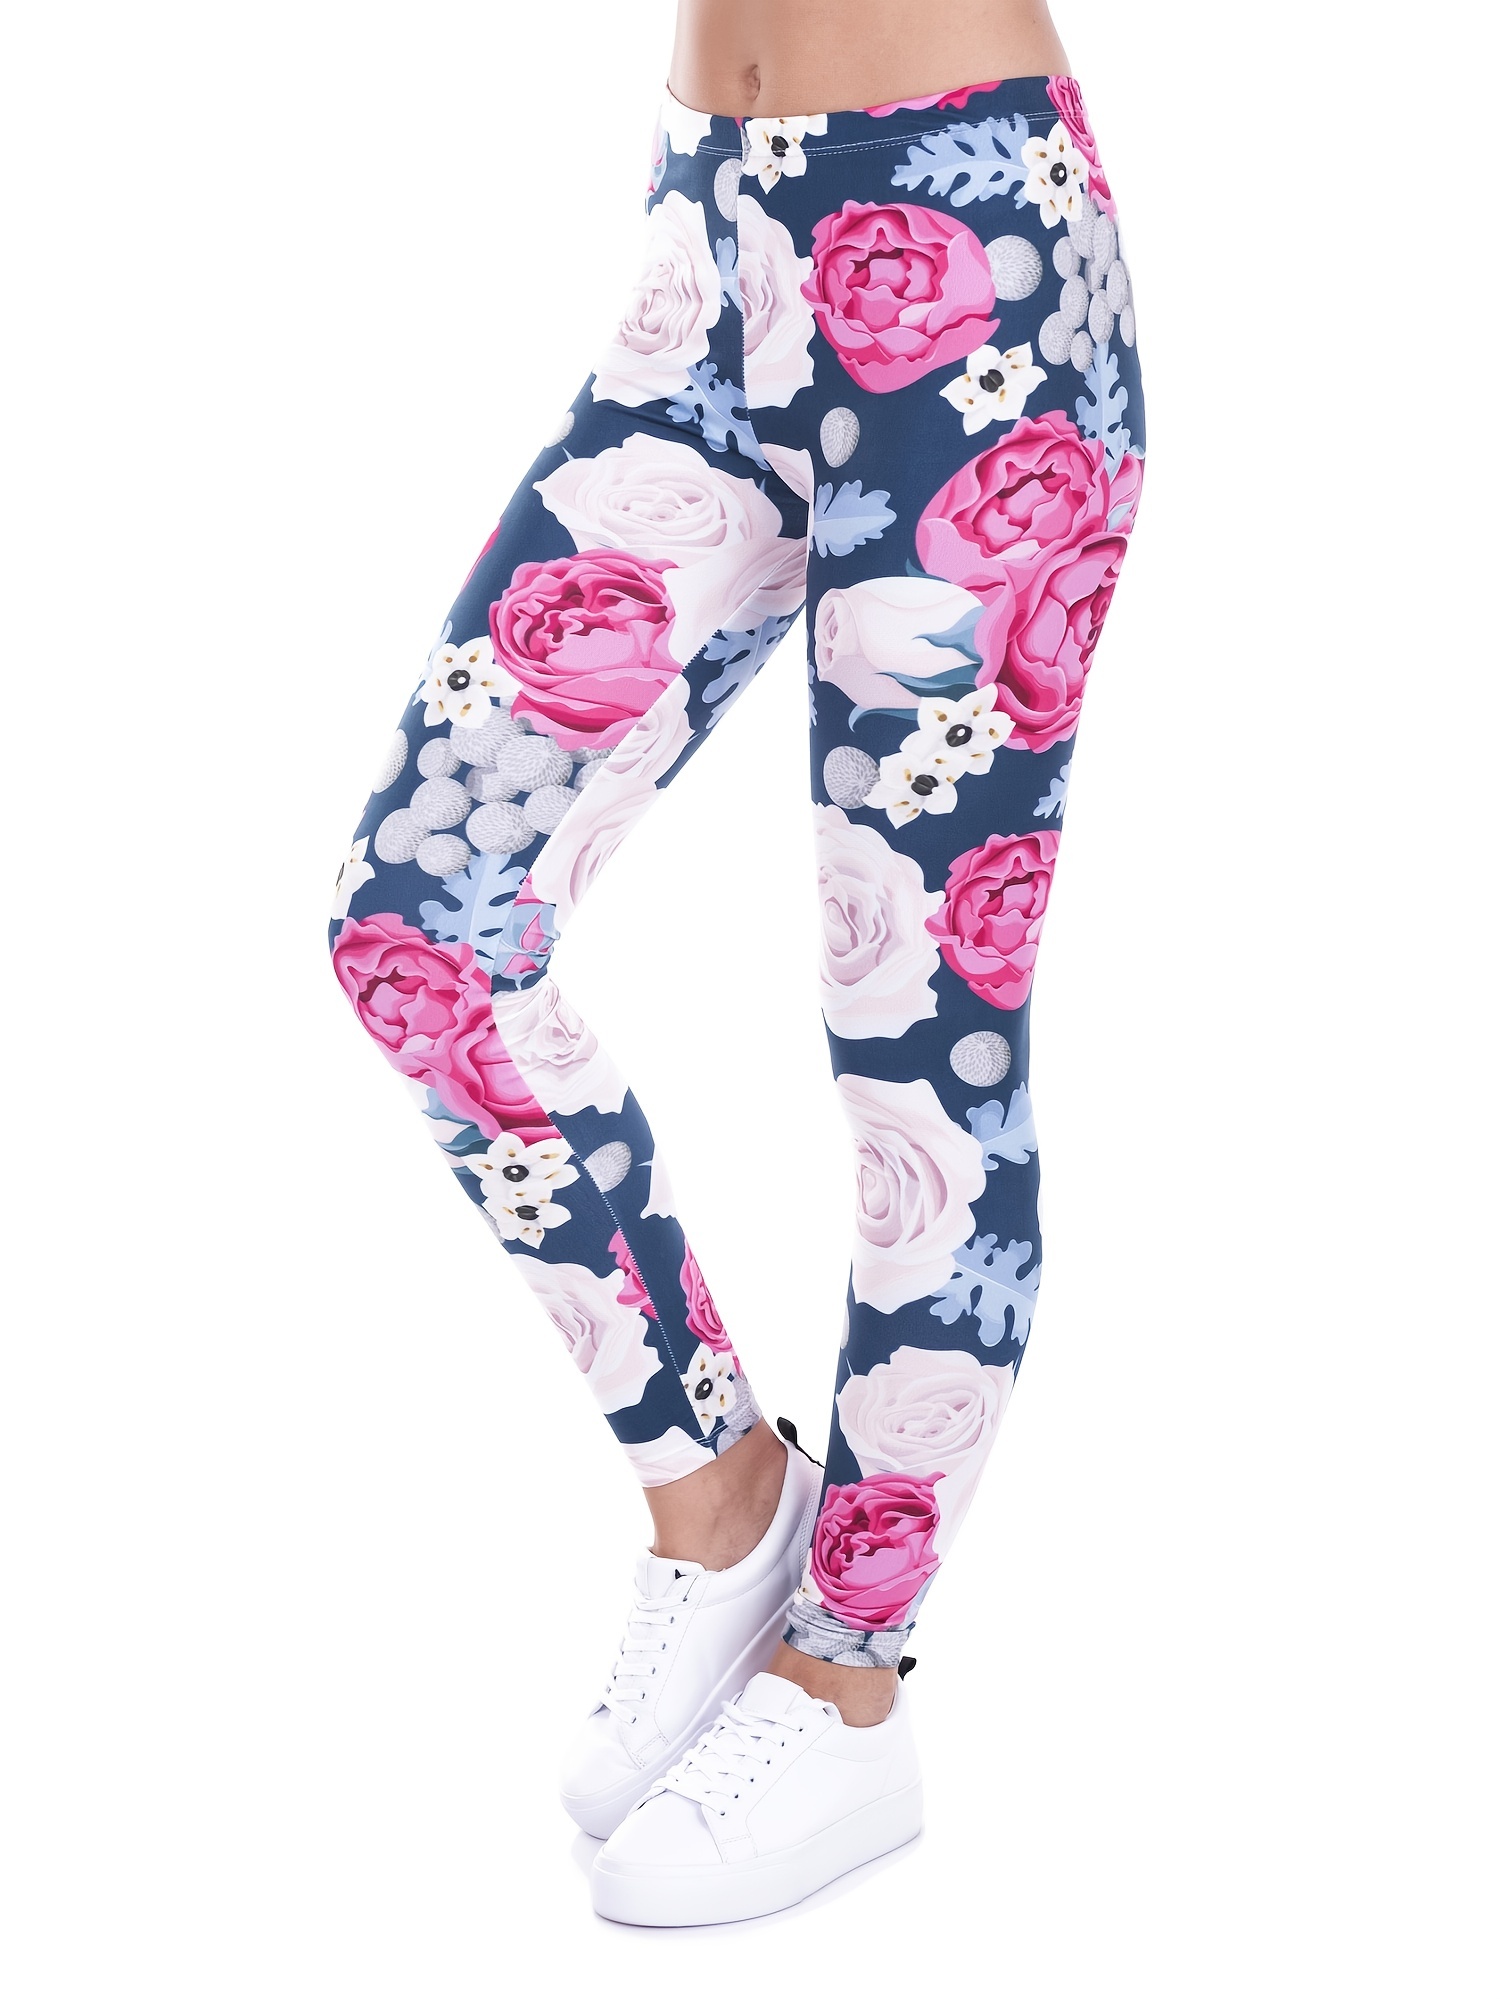 wild floral Leggings Female legging pants women clothing - AliExpress